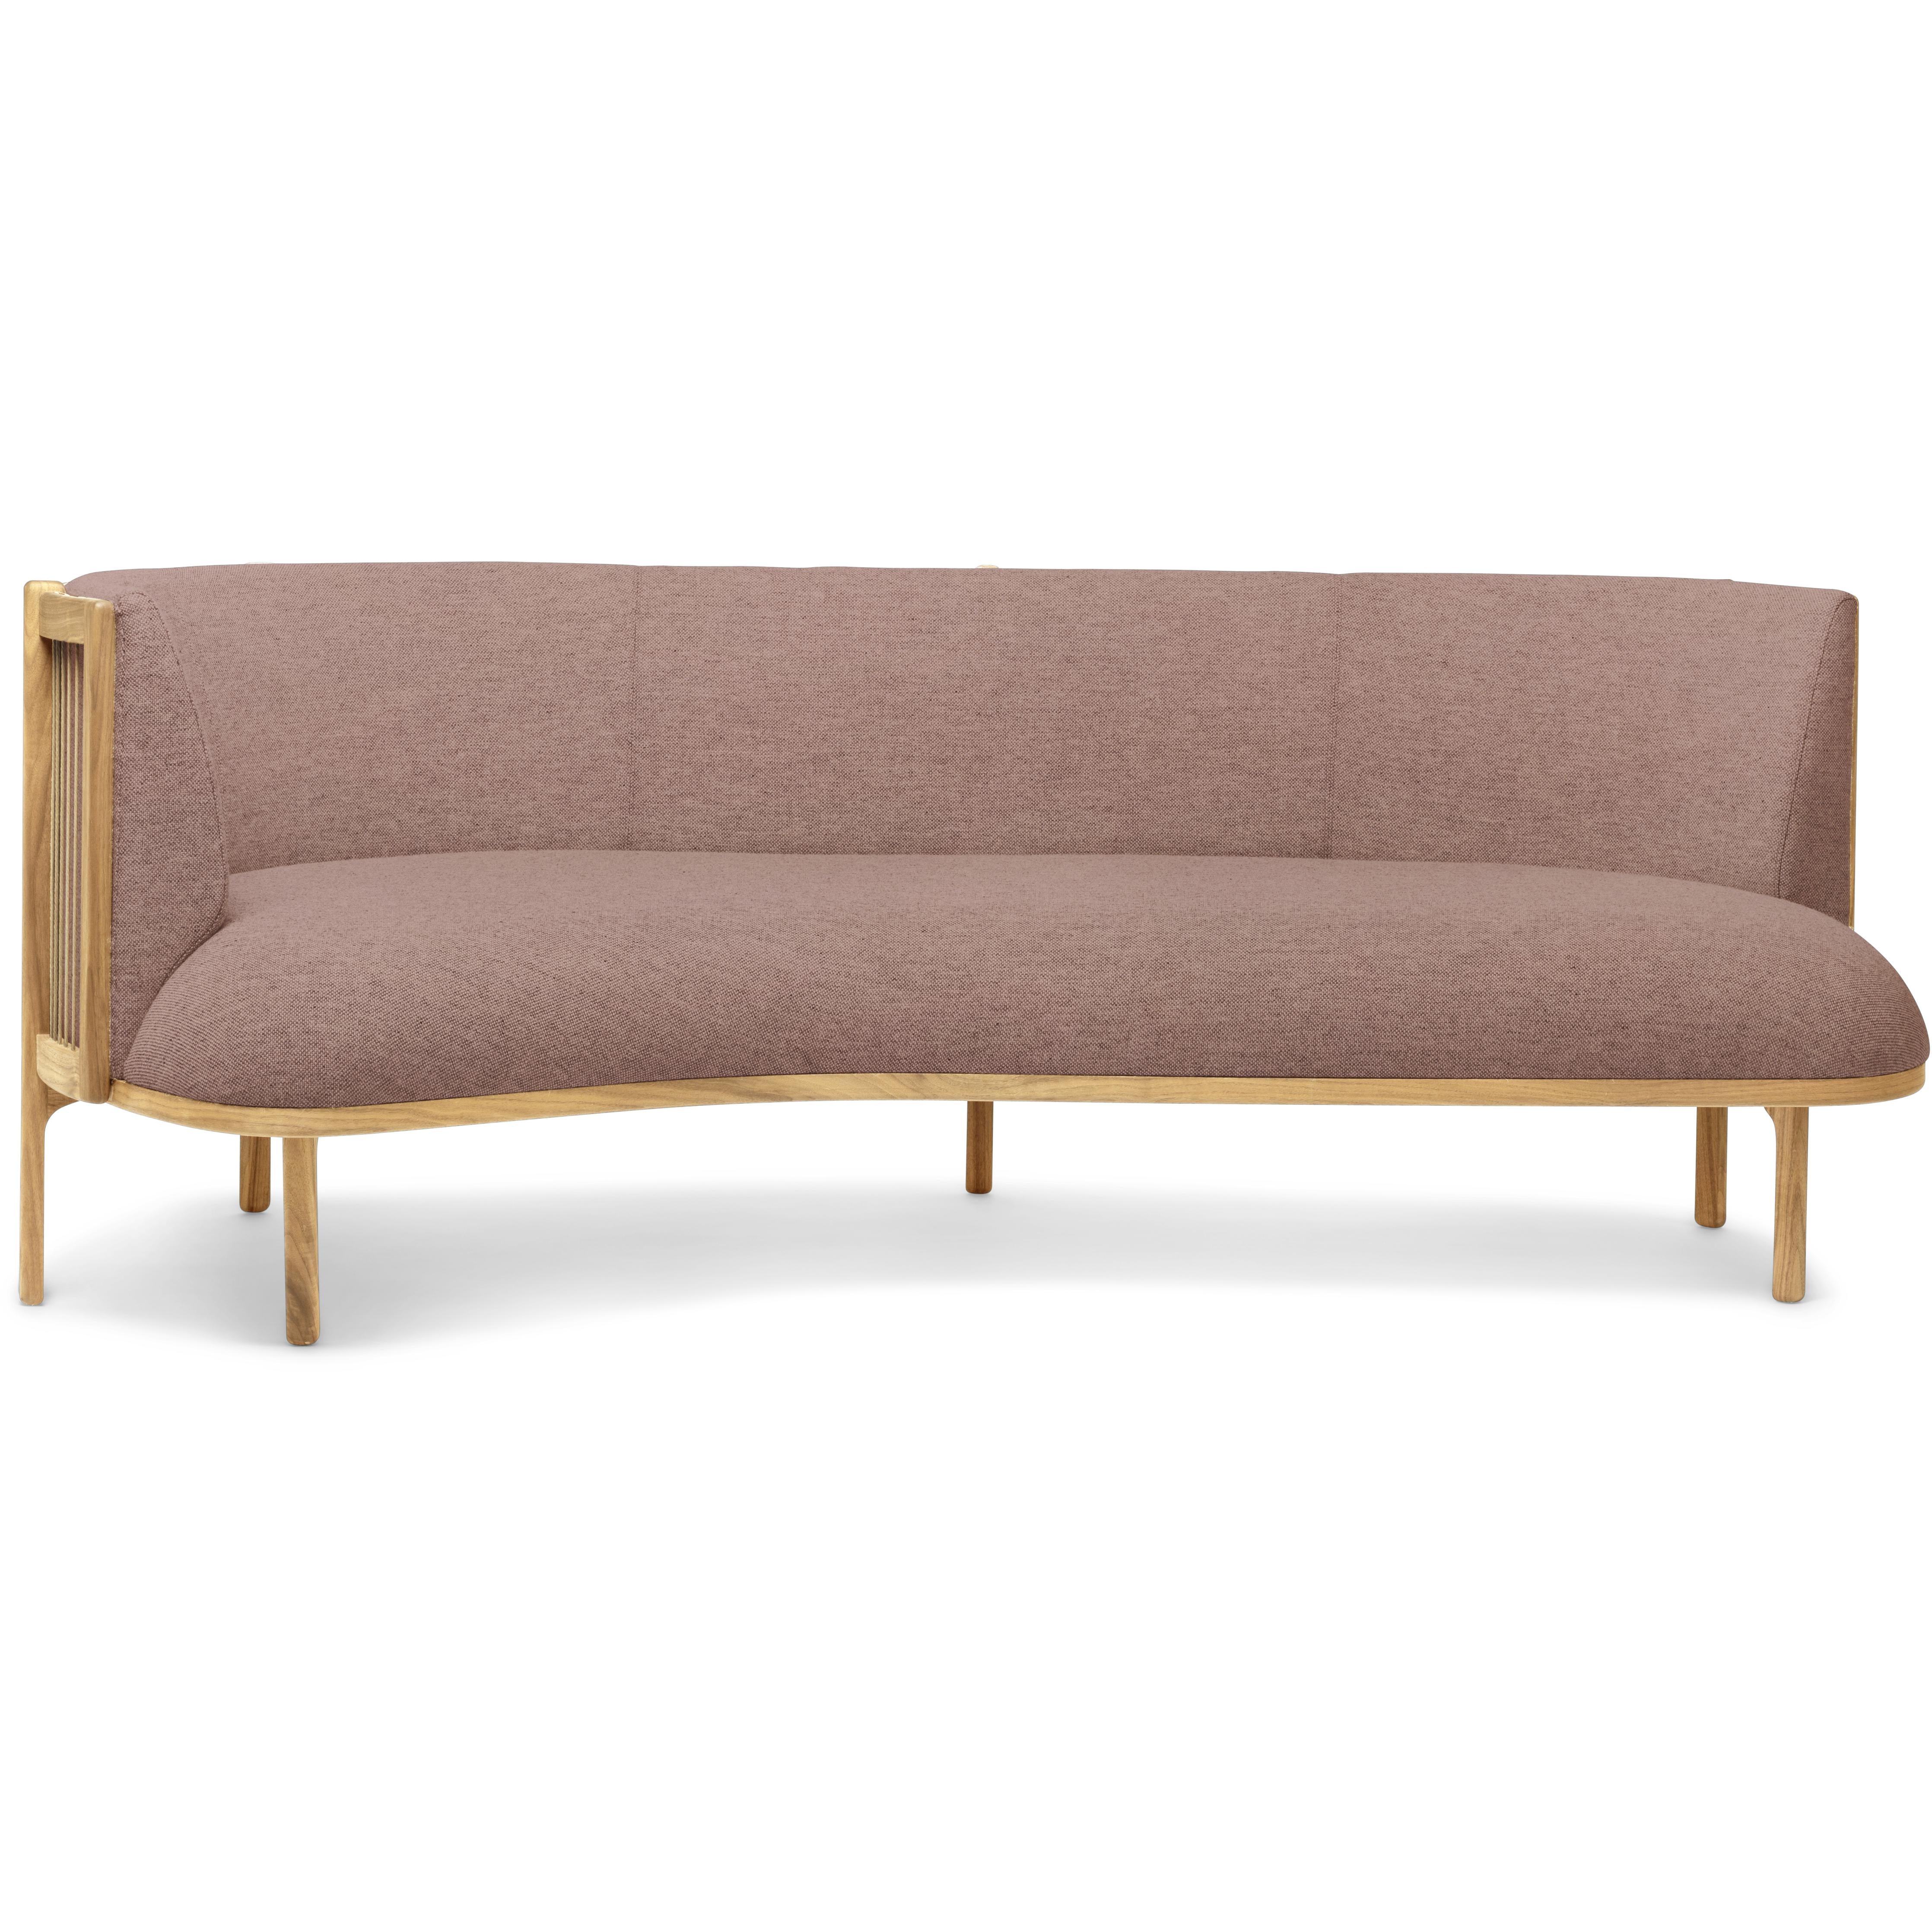 Carl Hansen Rf1903 L Sidevays Sofa 3 Seeater Left Oak Oak Oil/Fiord Fabric, Pink/Natural Brown